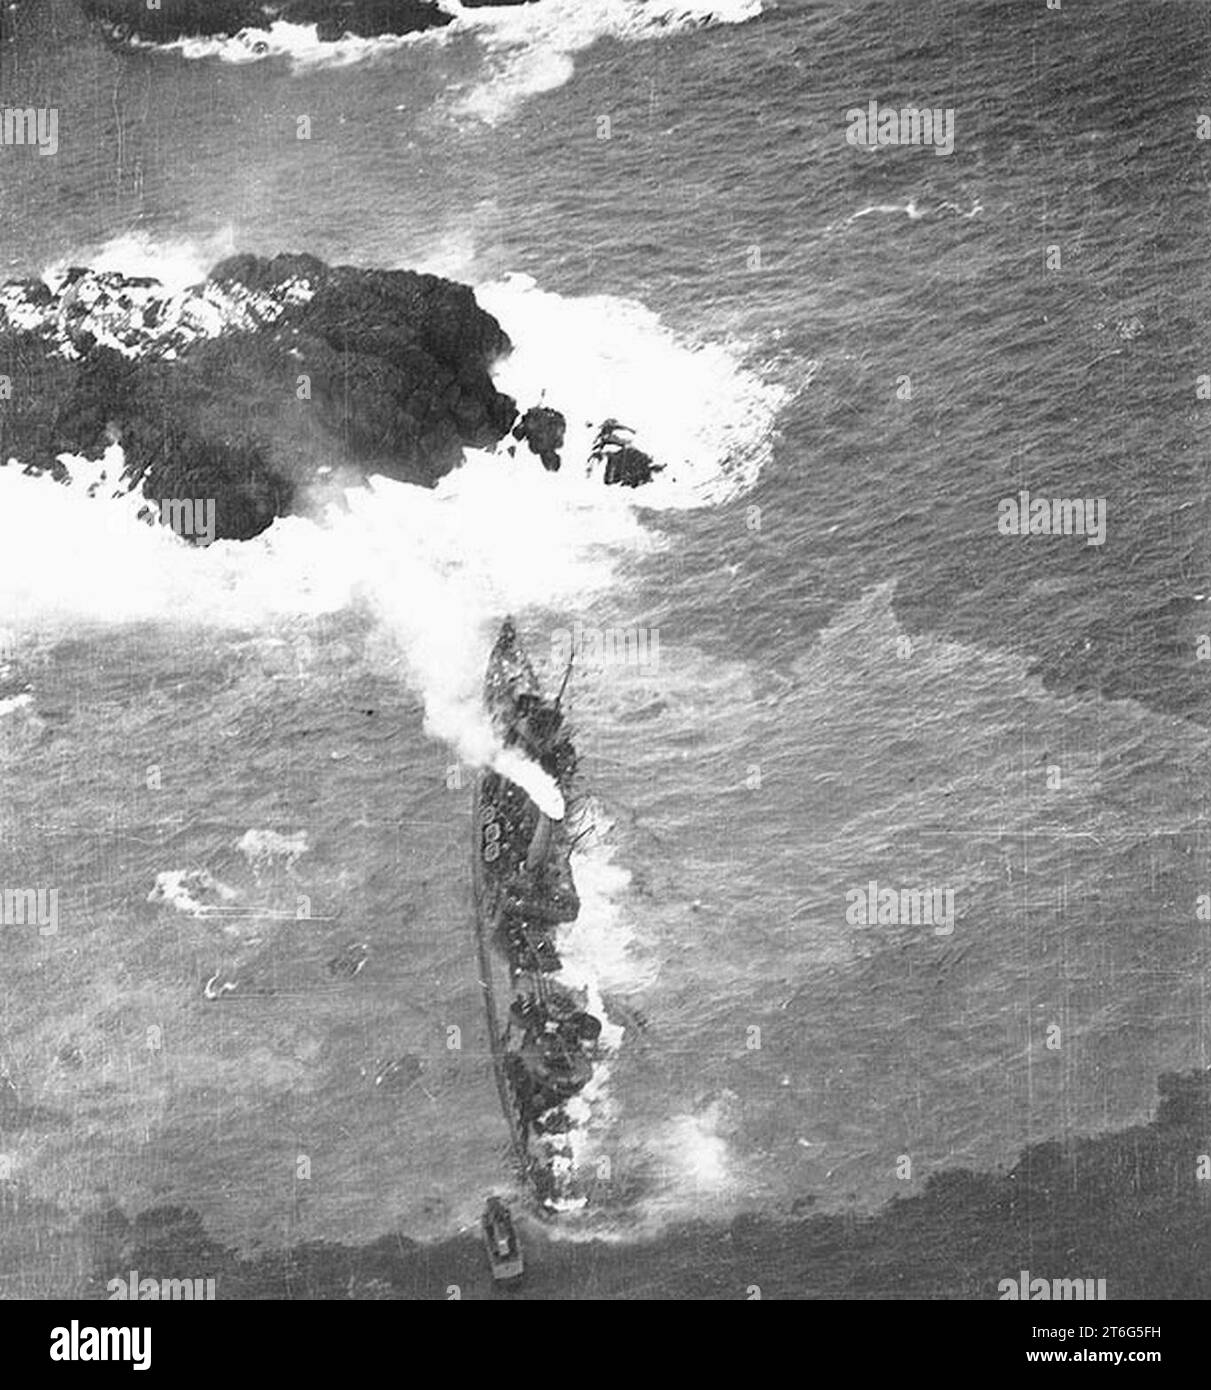 USS Worden (DD-352) aground off Amchitka in January 1943 Stock Photo